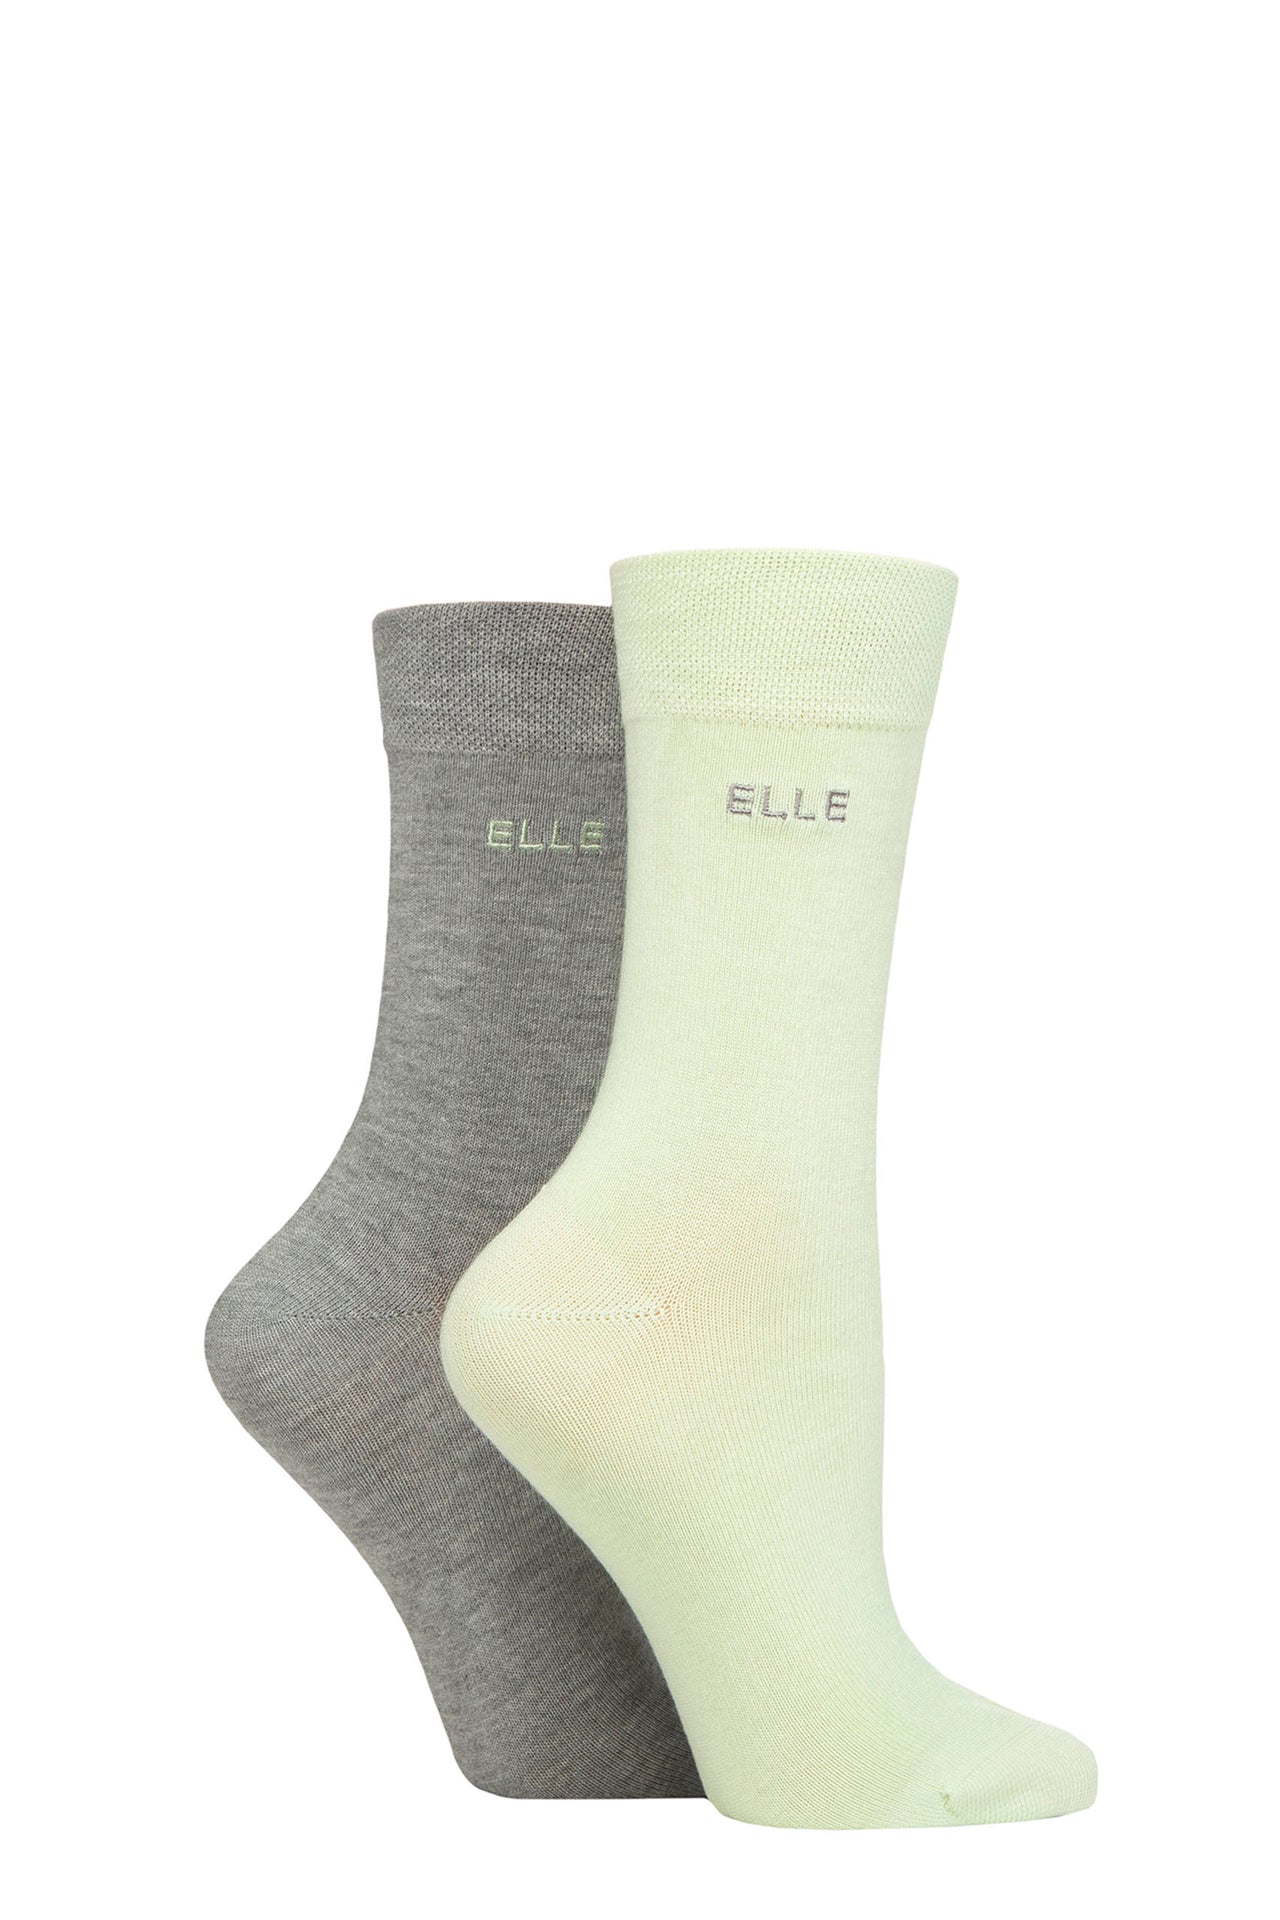 Ella 2 Pair Plain Bamboo Fibre Socks - Keylime Pie